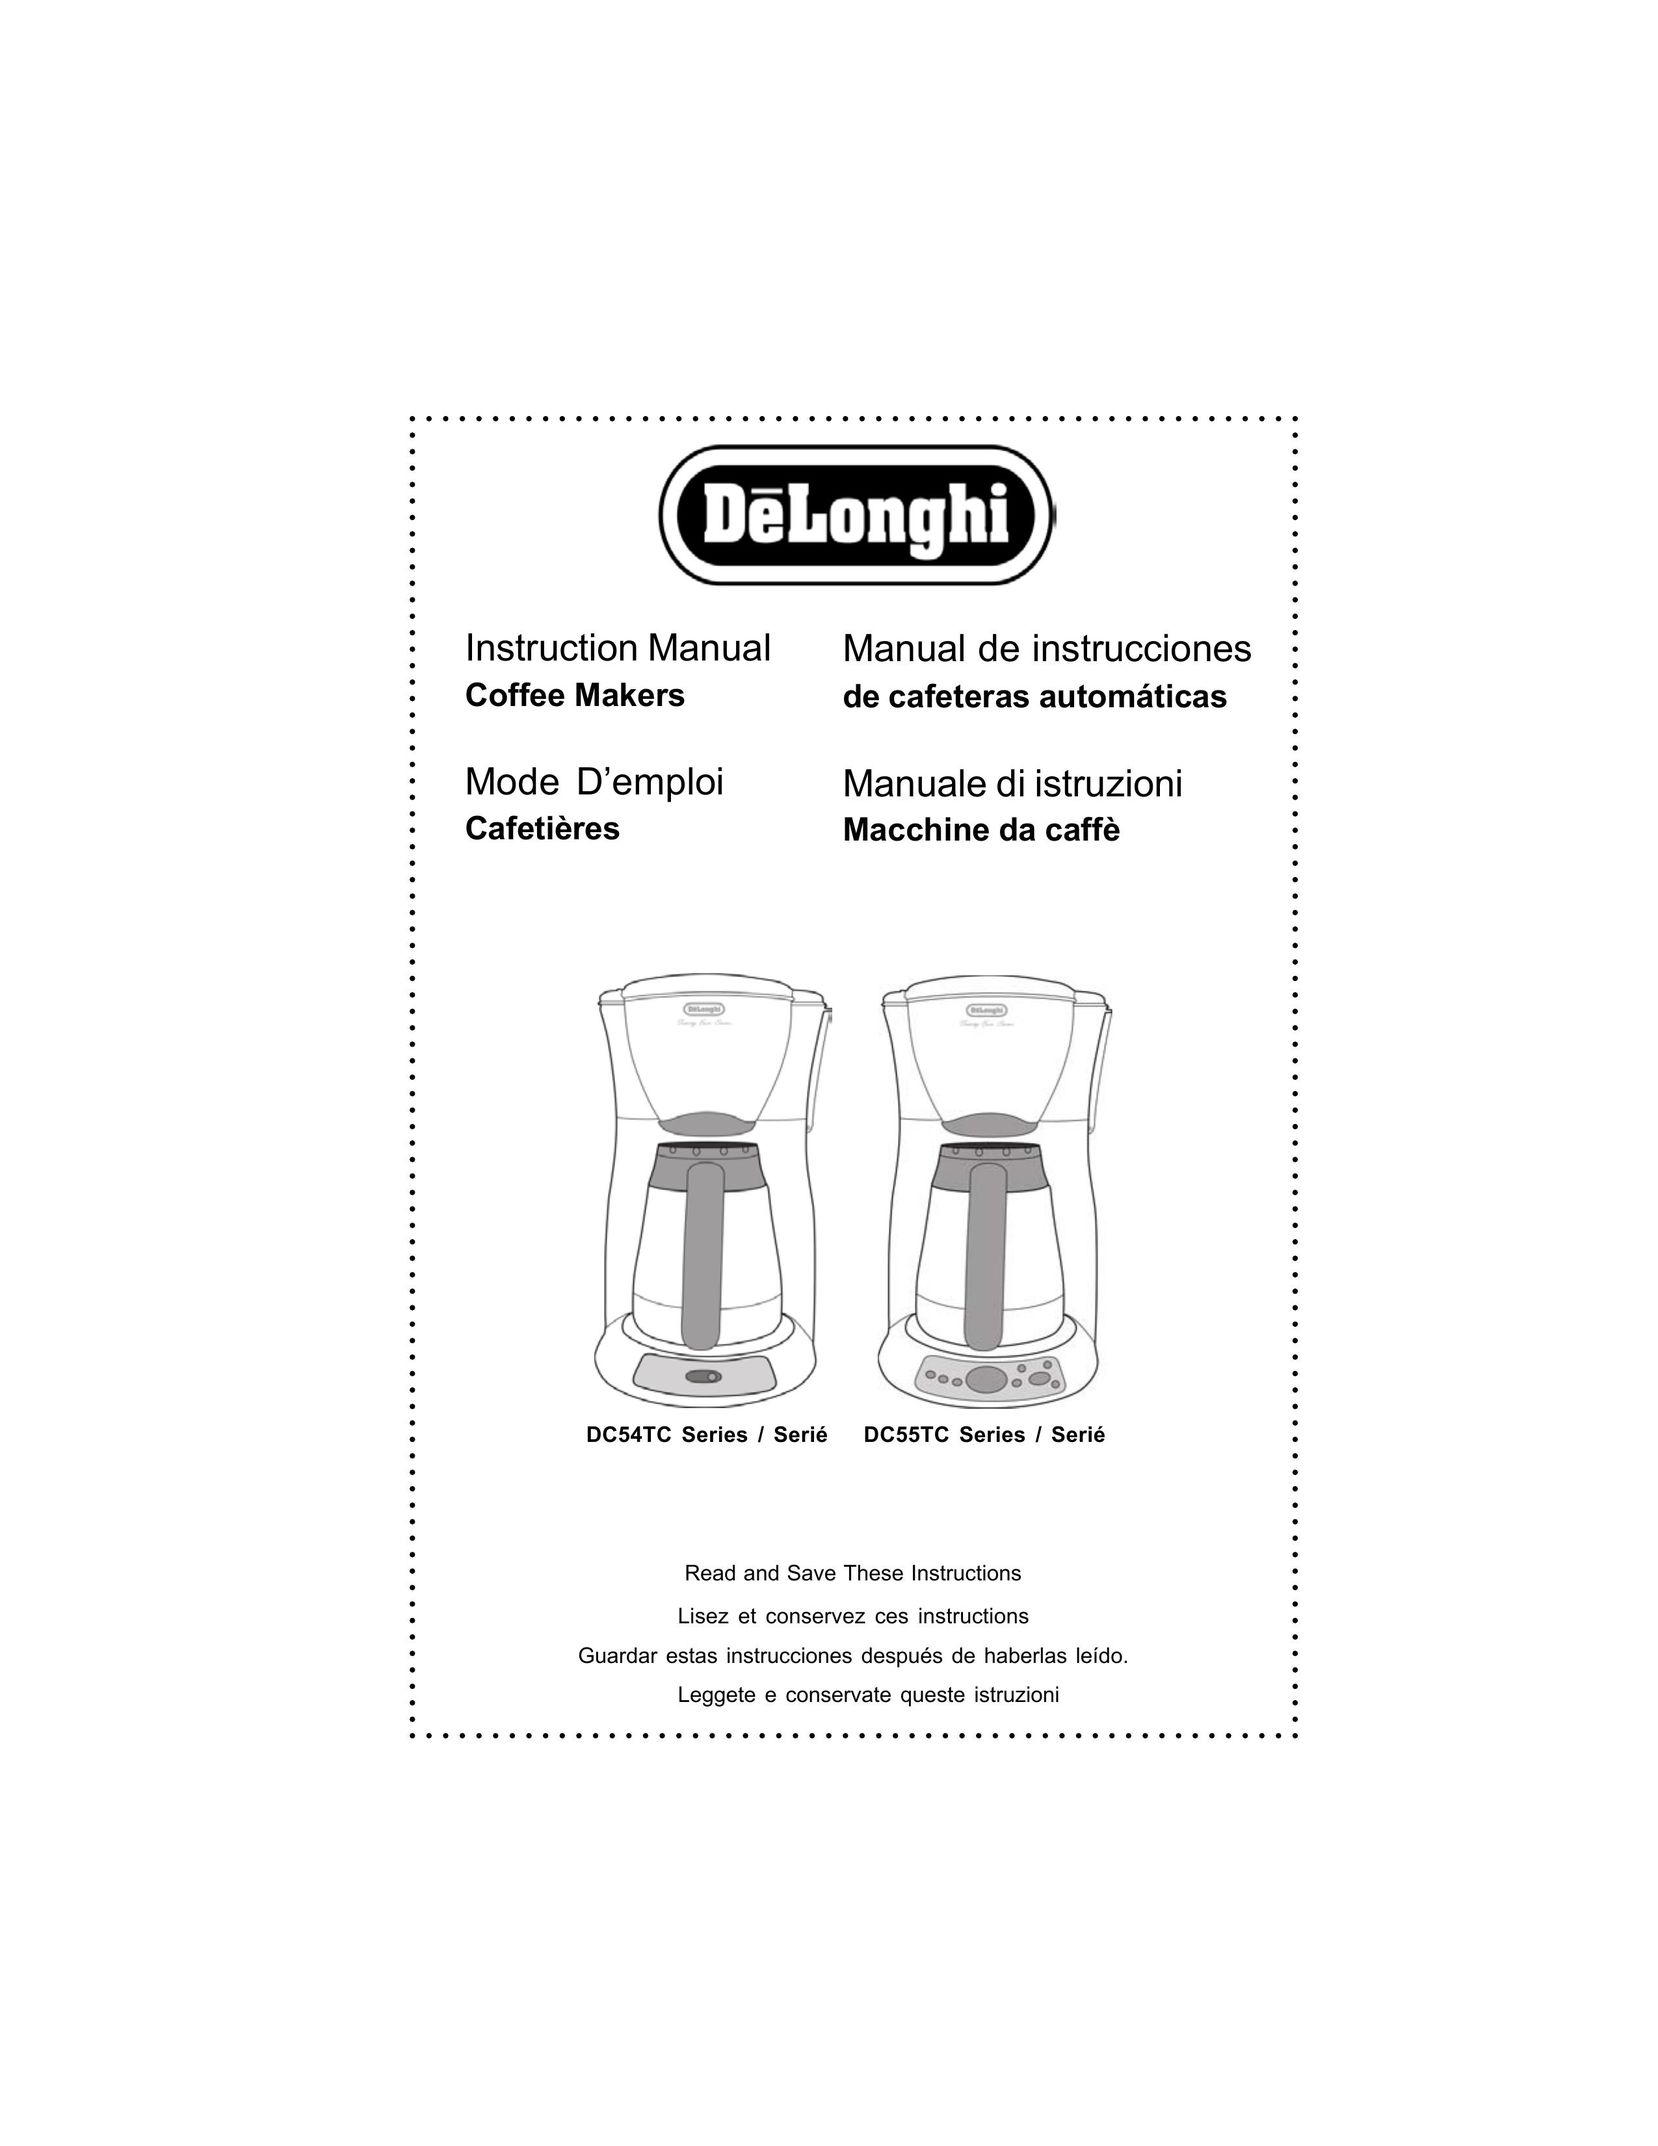 DeLonghi DC54TC Series Coffeemaker User Manual